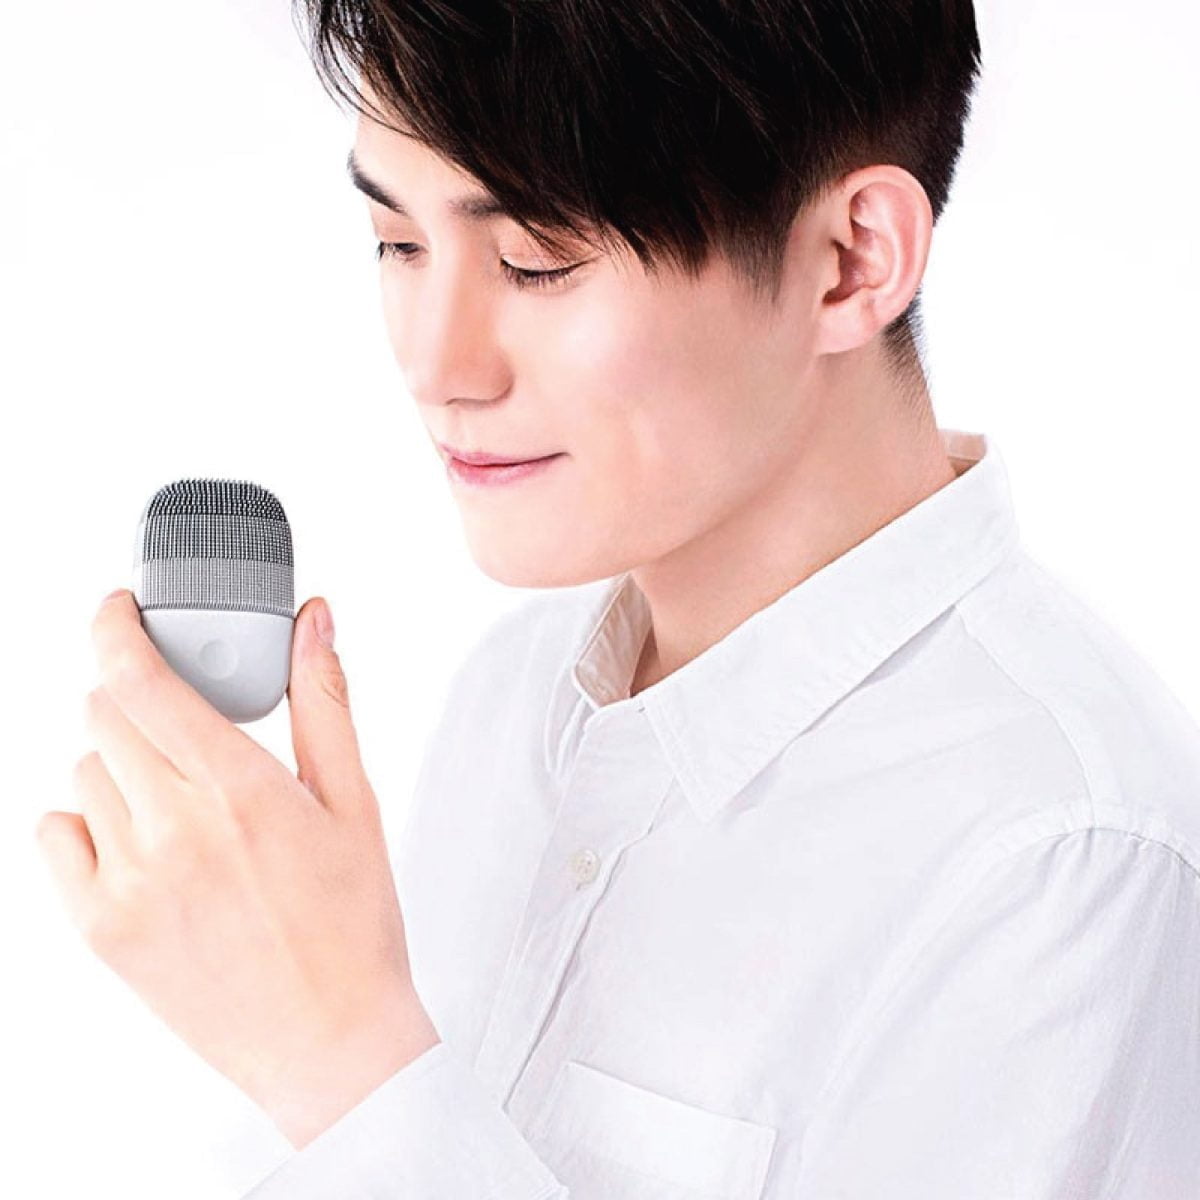 Wtf3 01 شاومي &Lt;Strong&Gt;تنظيف عميق للوجه - أوضاع 3 سرعات - 3 مناطق تنظيف - مصنوعة من السيليكون المضاد للحساسية - عمر بطارية طويل - تنظيف افتراضي في التسعينيات&Lt;/Strong&Gt; منظف الوجه الذكي Xiaomi Mijia Inface - برتقالي (جائزة التصميم لعام 2019)